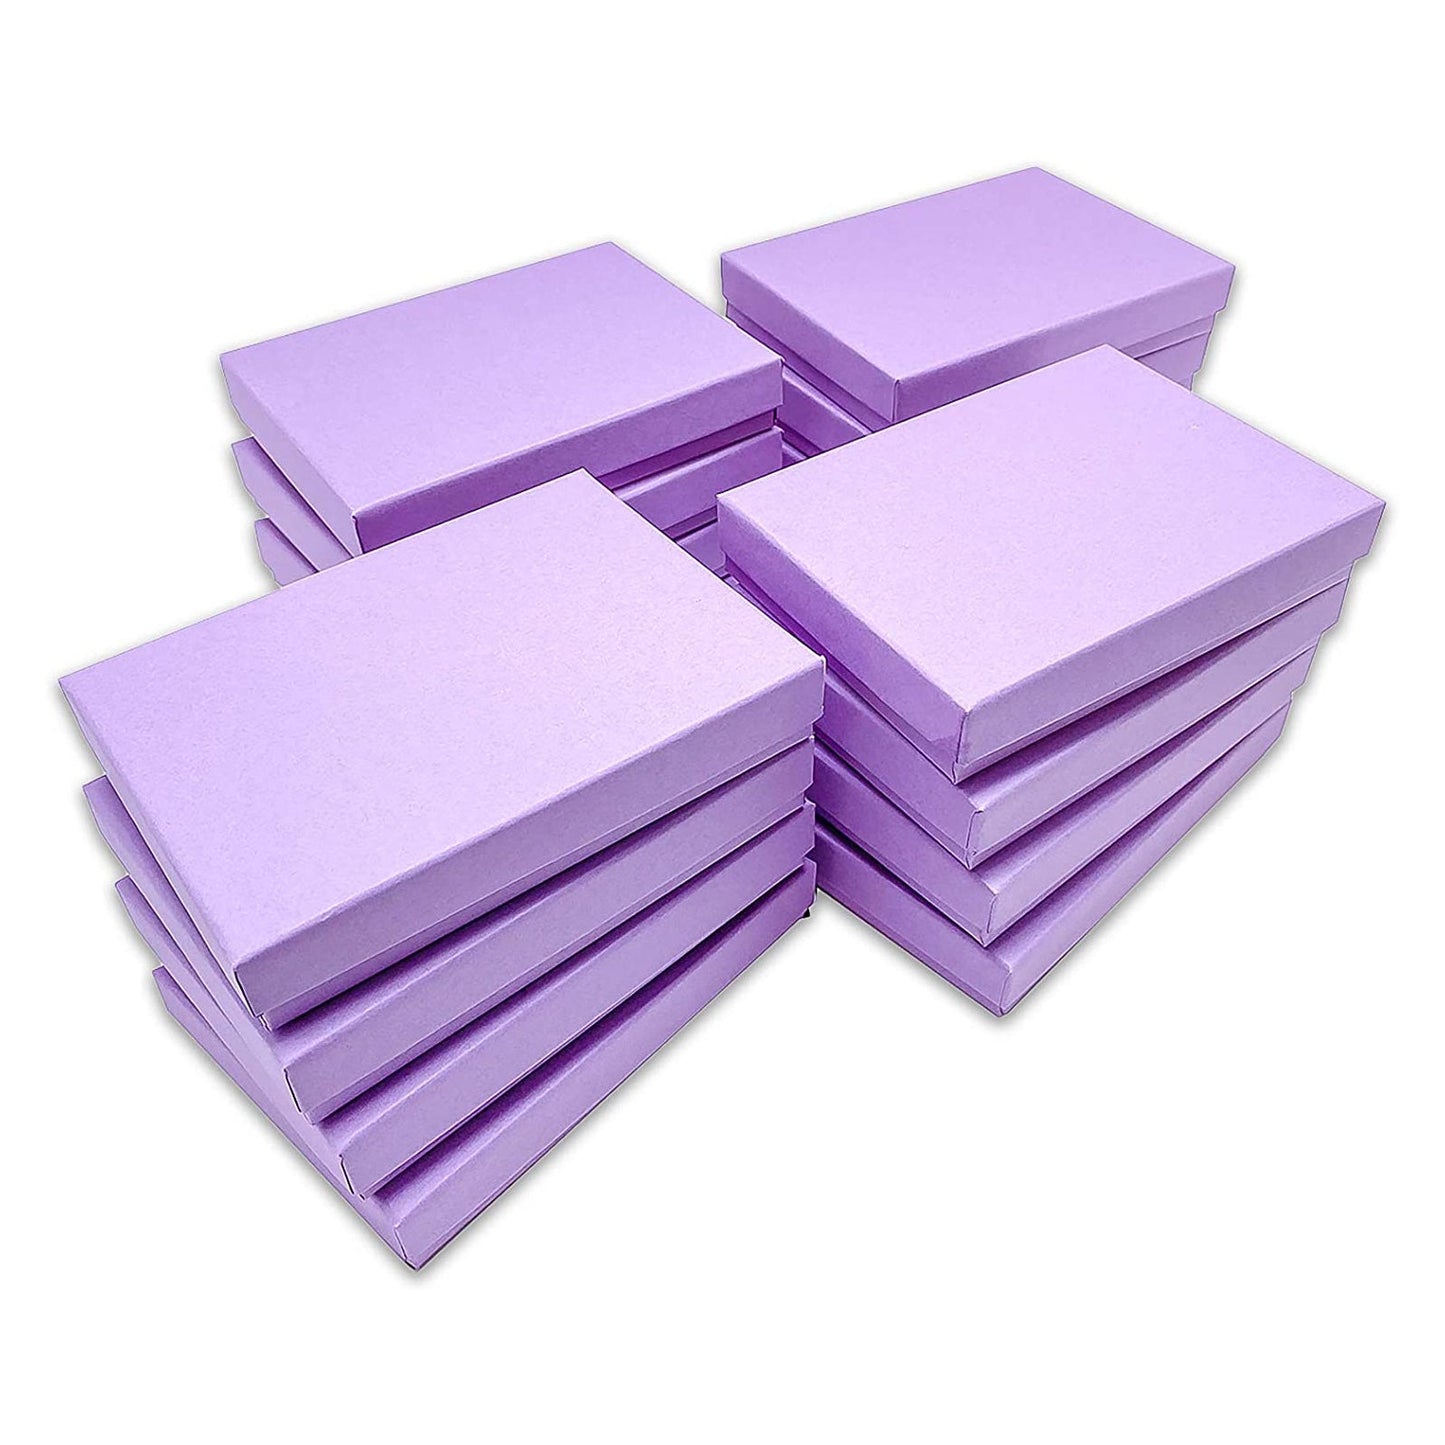 #75 - 7 1/8" x 5 1/8" x 1 1/8"H Matte Purple Cotton Filled Paper Box